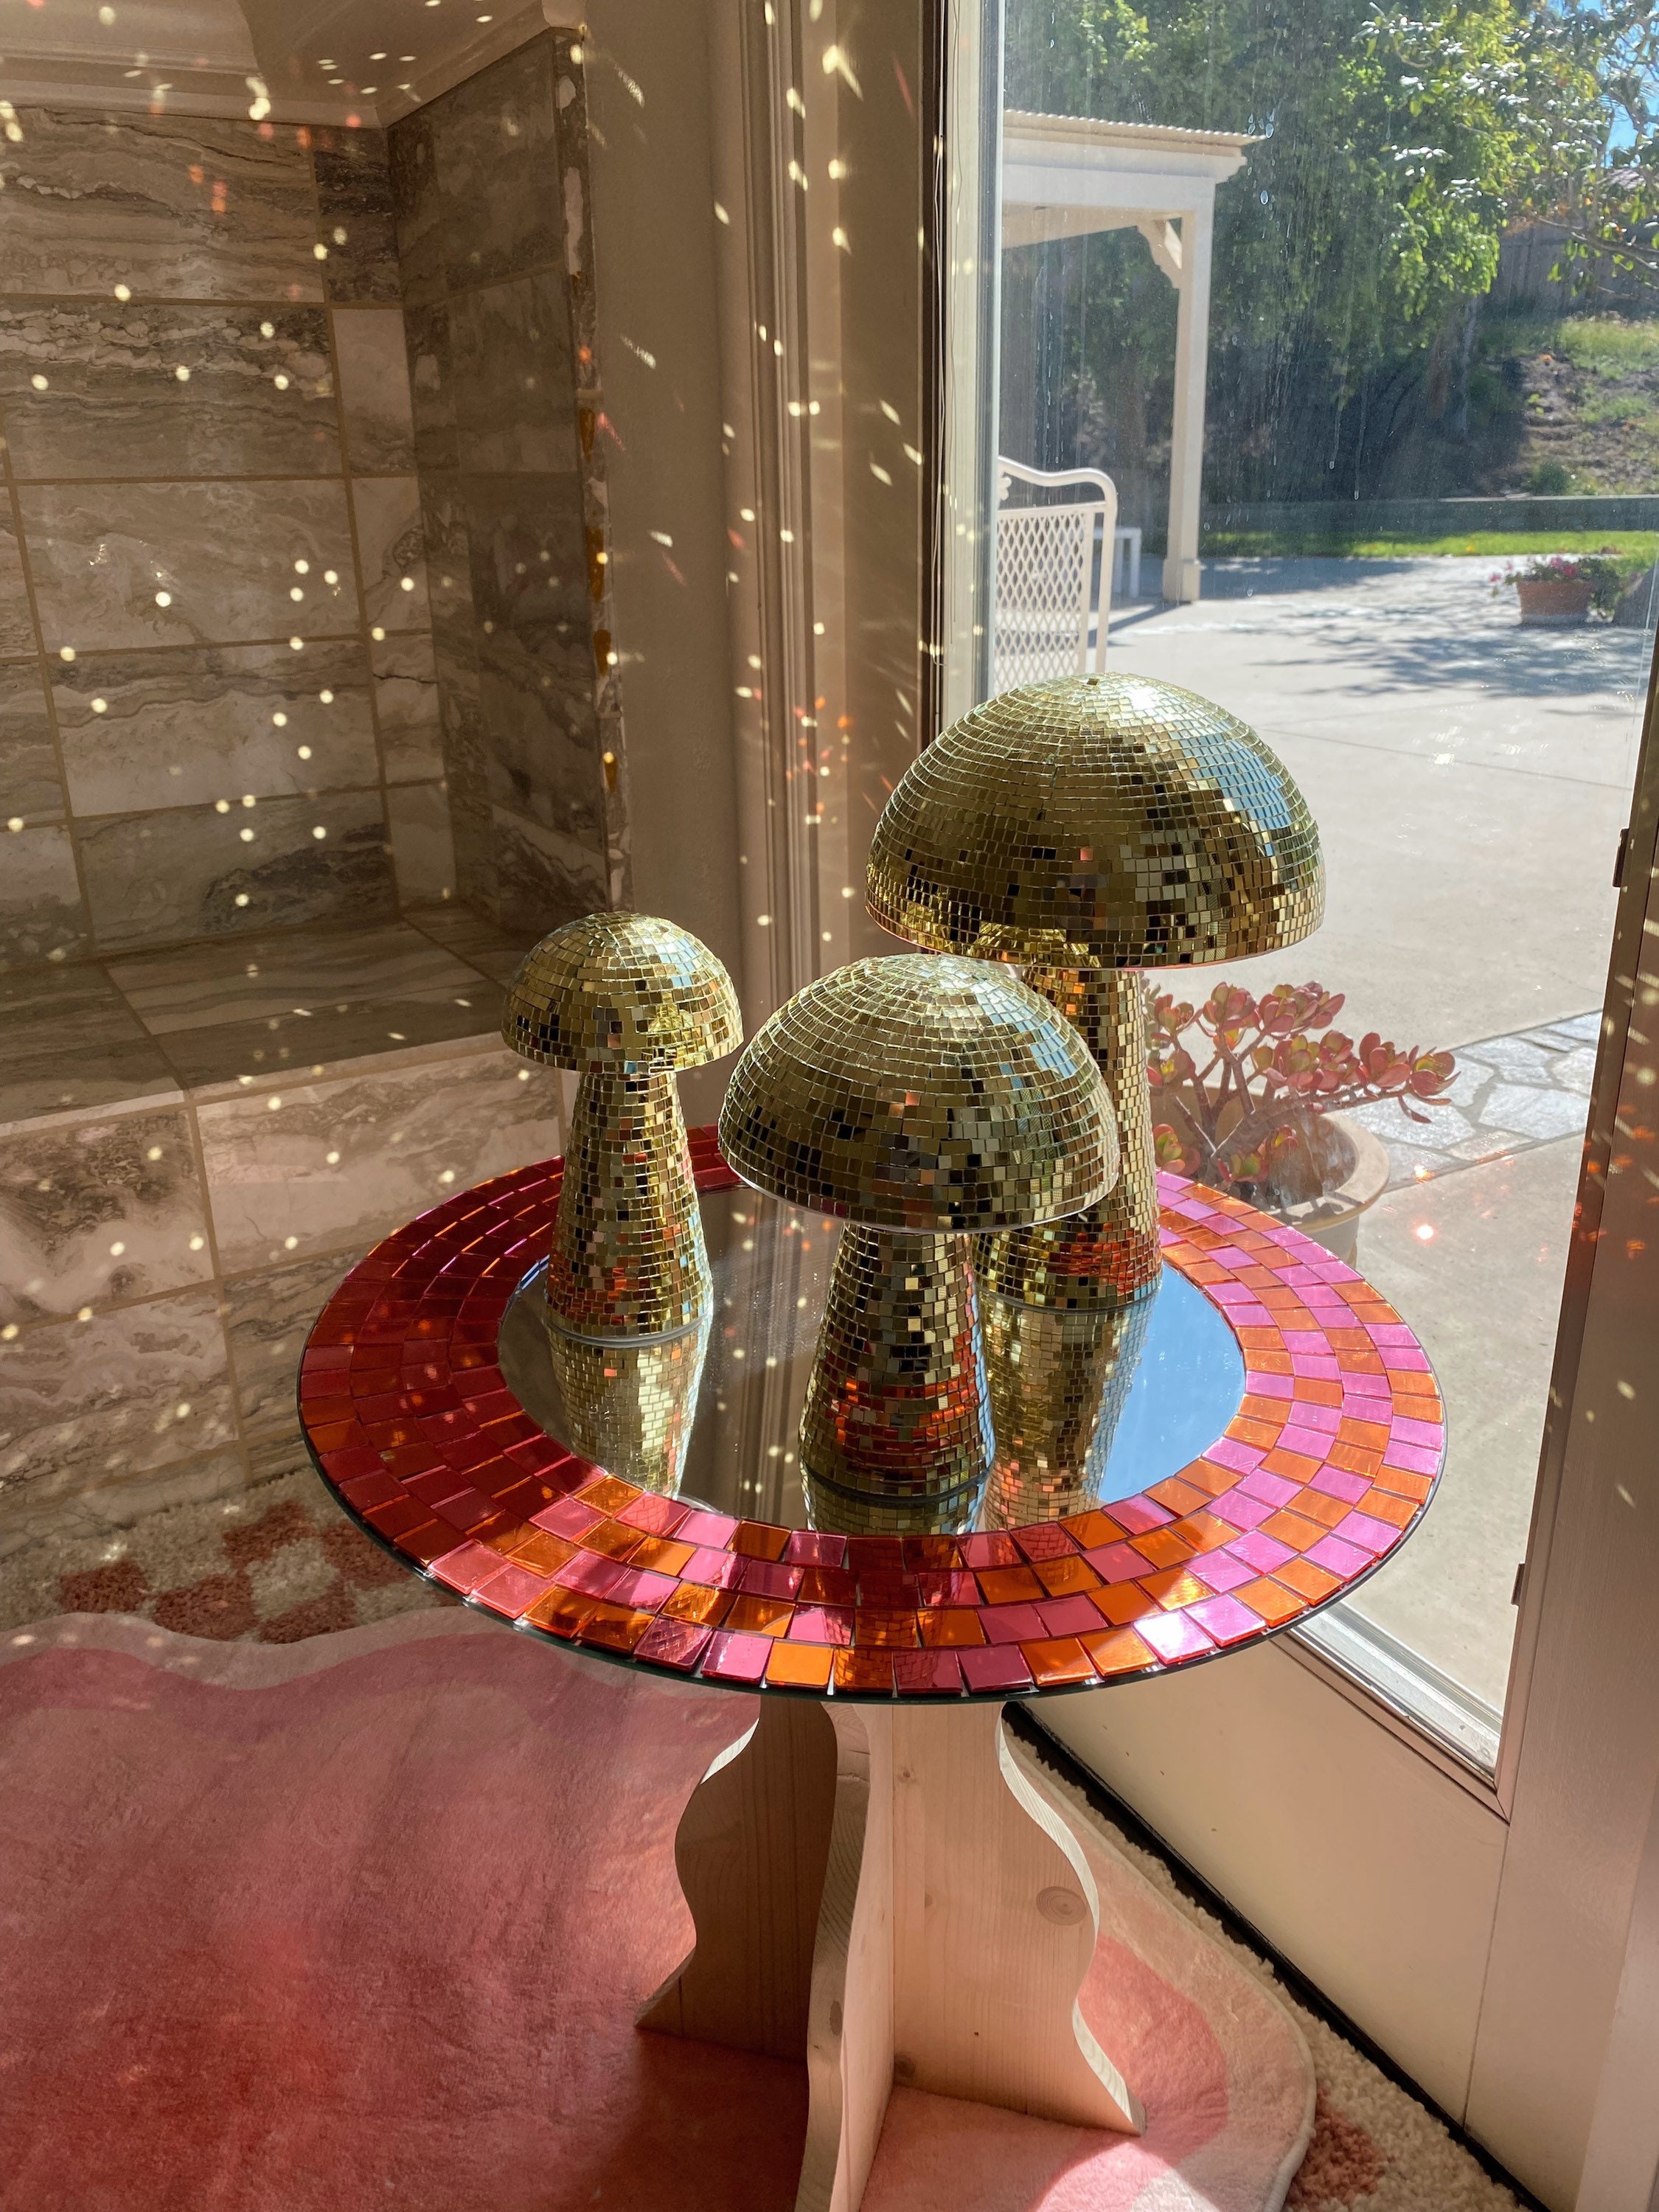 Disco Mushroom LED Diffuser